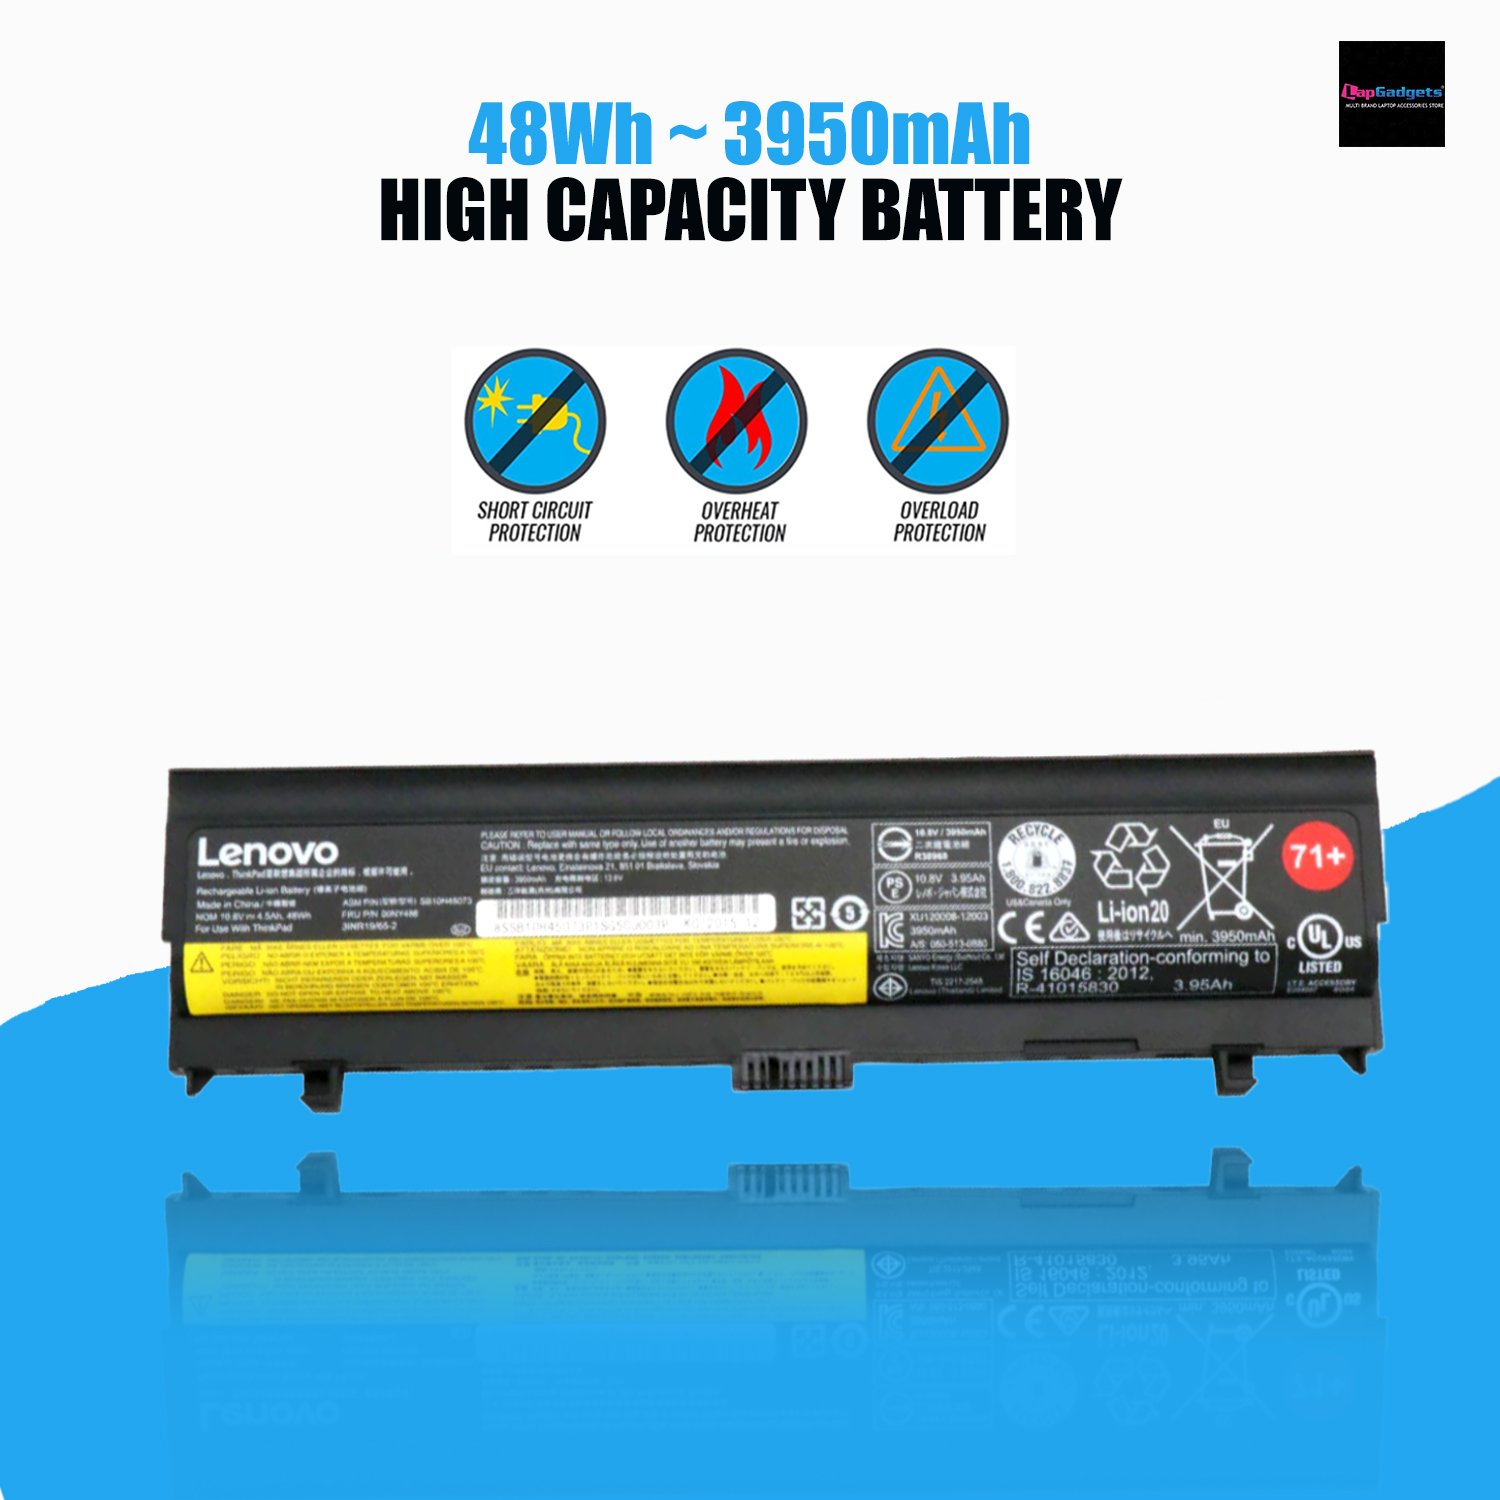 High-Performance Thinkpad SB10H45071 Battery for Thinkpad Laptops - L470, L480, L560, L570 - Long-lasting Power Solution